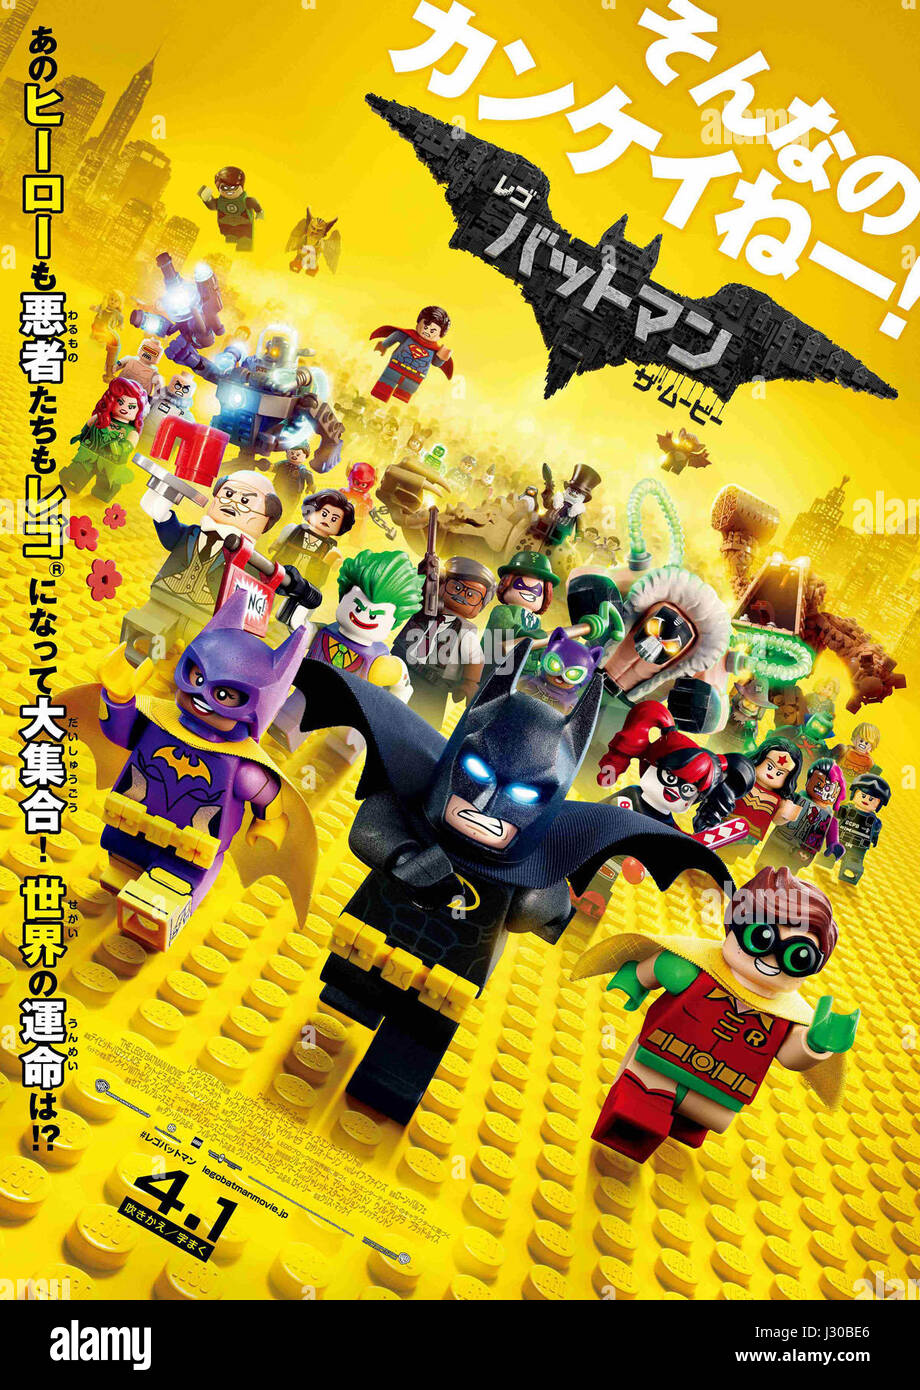 https://c8.alamy.com/comp/J30BE6/the-lego-batman-movie-japanese-poster-2017-warner-broscourtesy-everett-J30BE6.jpg